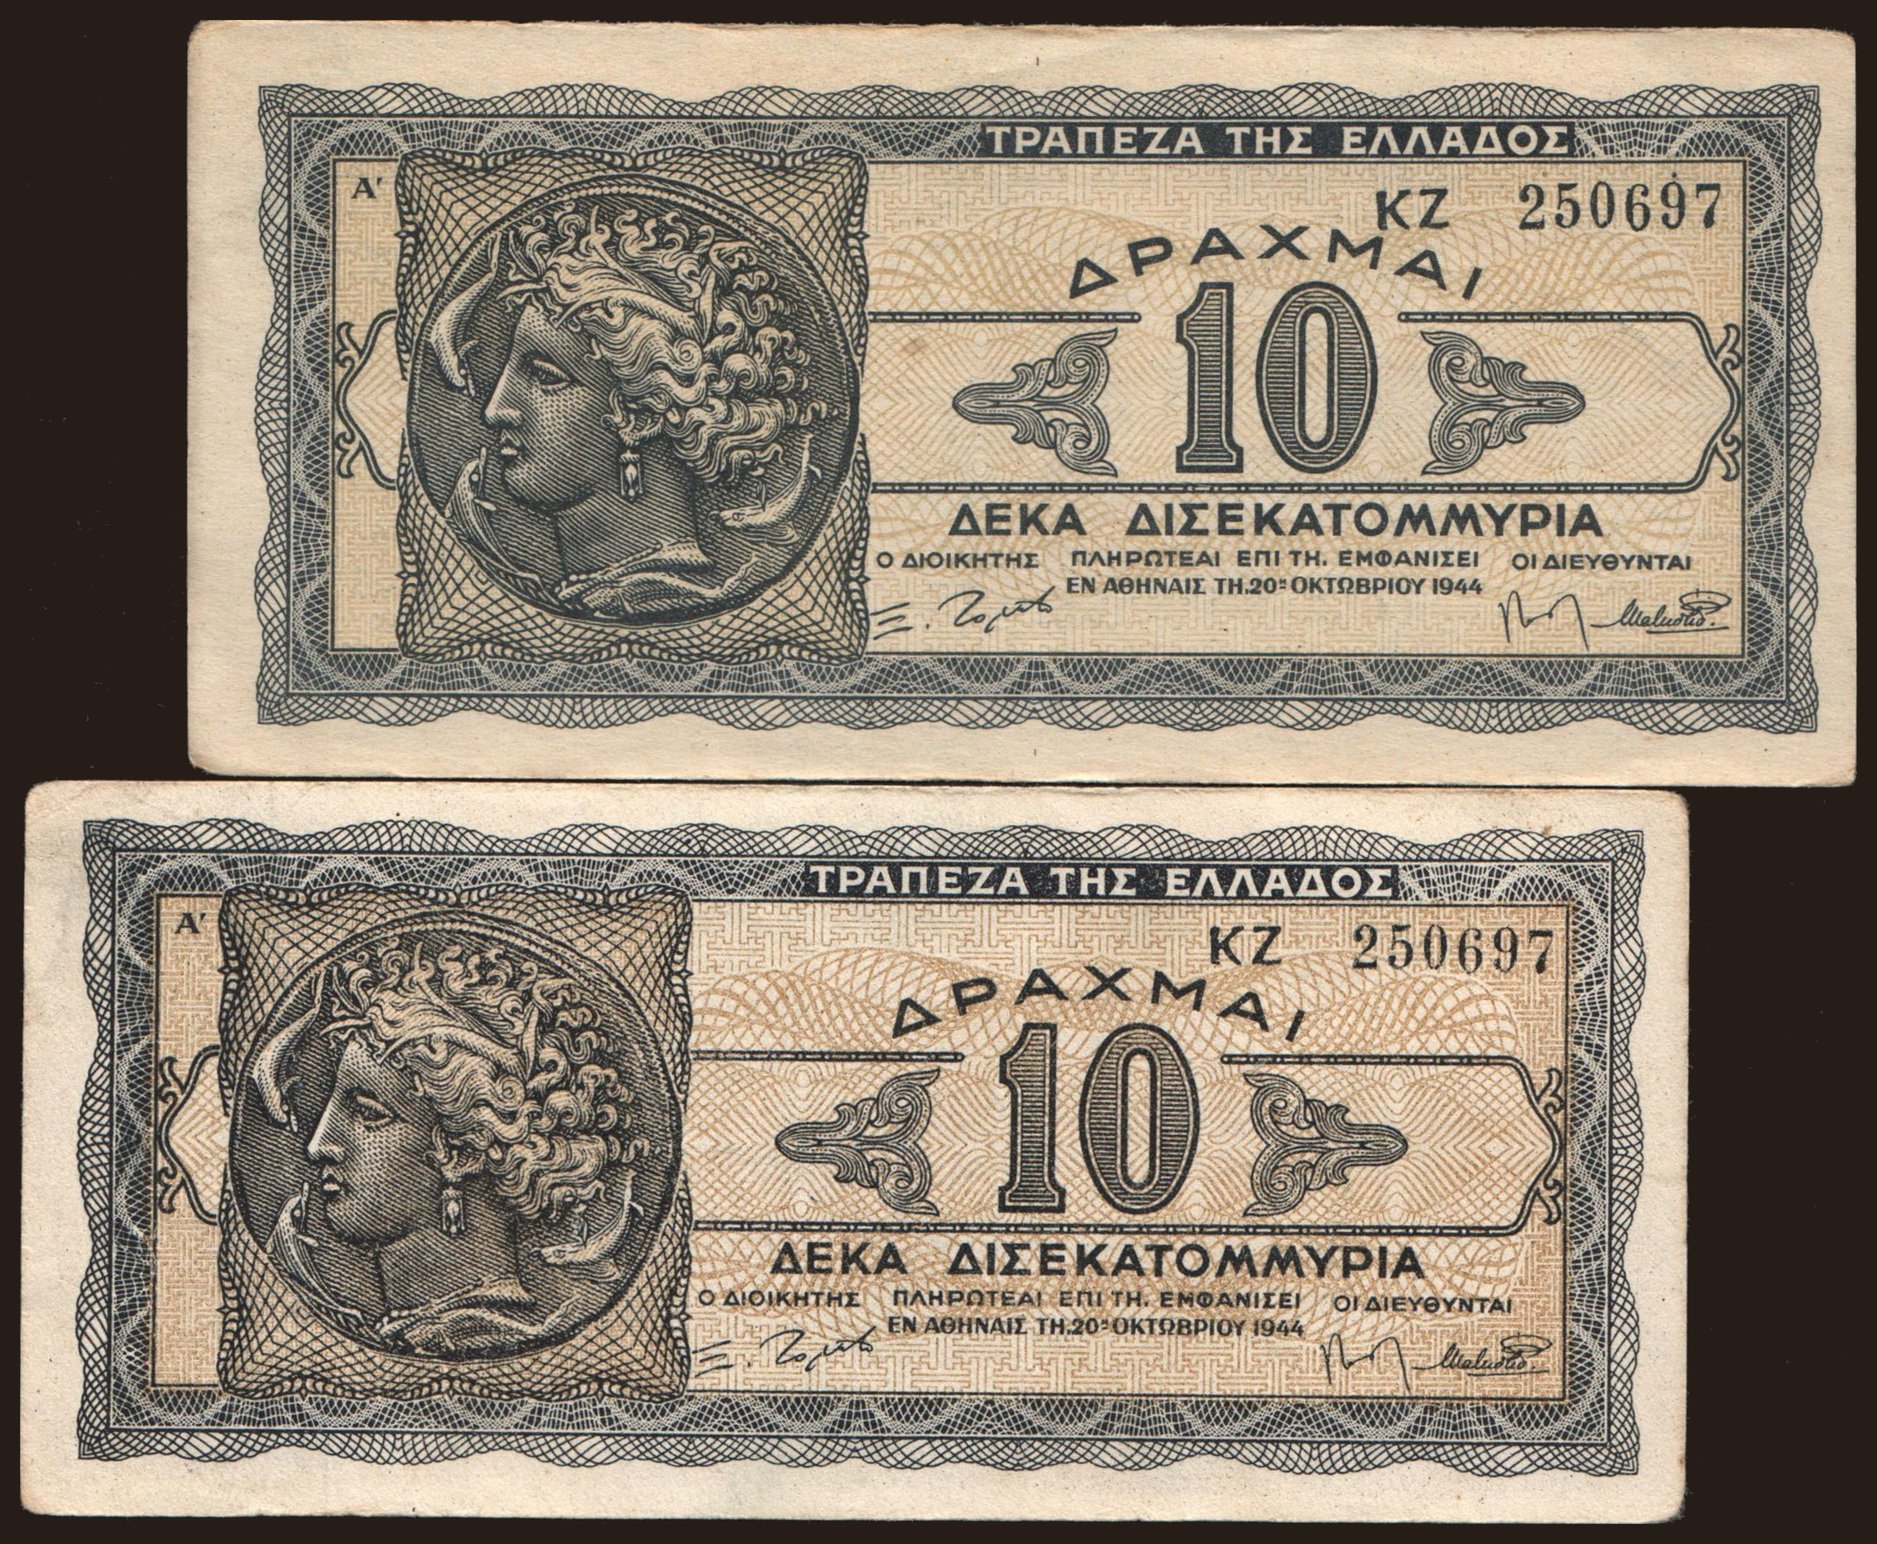 10.000.000.000 drachmai, 1944